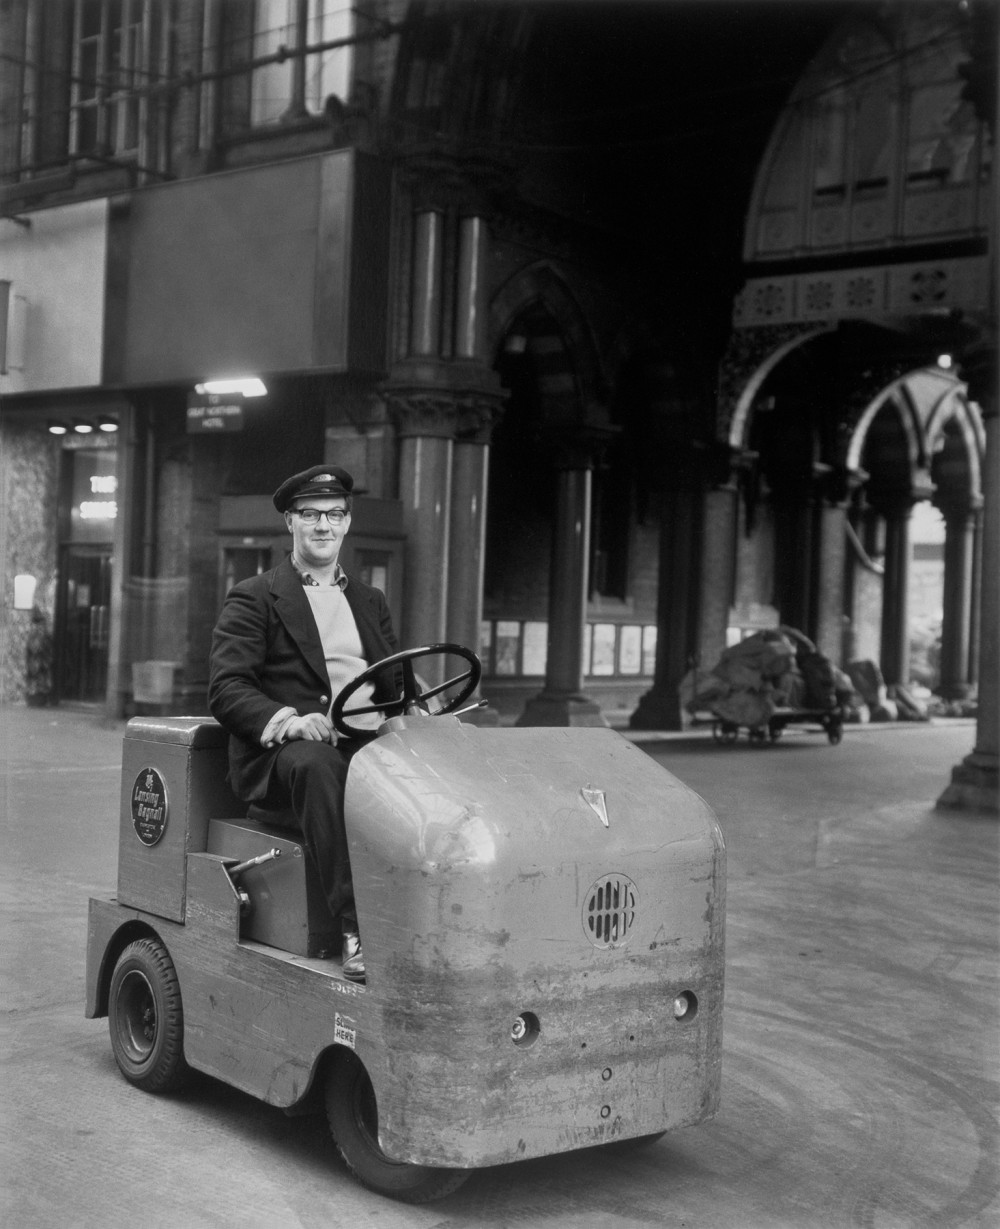 Man on Station Vehicle, St Pancras, London (1962) by Evelyn Hofer